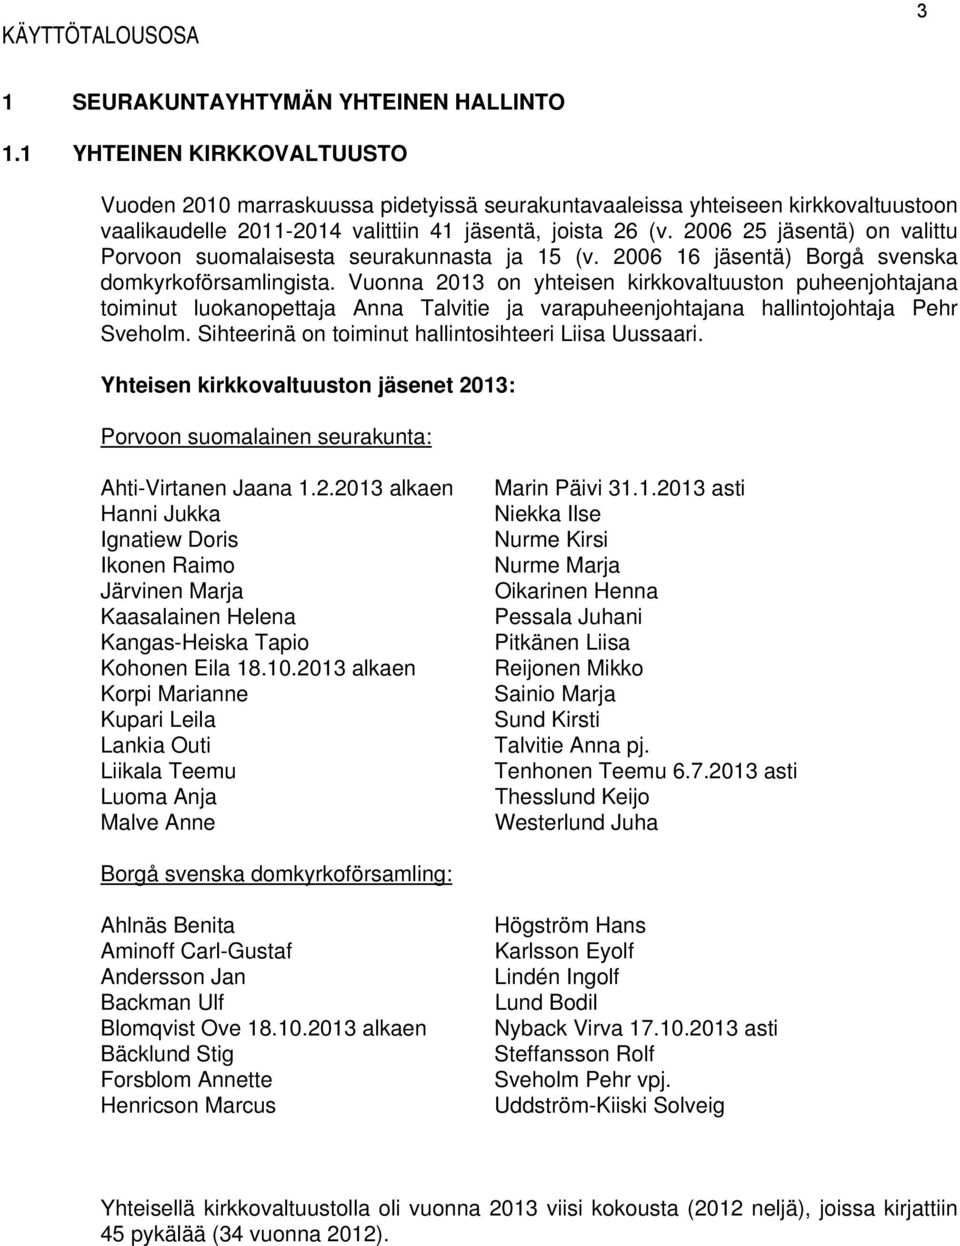 2006 25 jäsentä) on valittu Porvoon suomalaisesta seurakunnasta ja 15 (v. 2006 16 jäsentä) Borgå svenska domkyrkoförsamlingista.